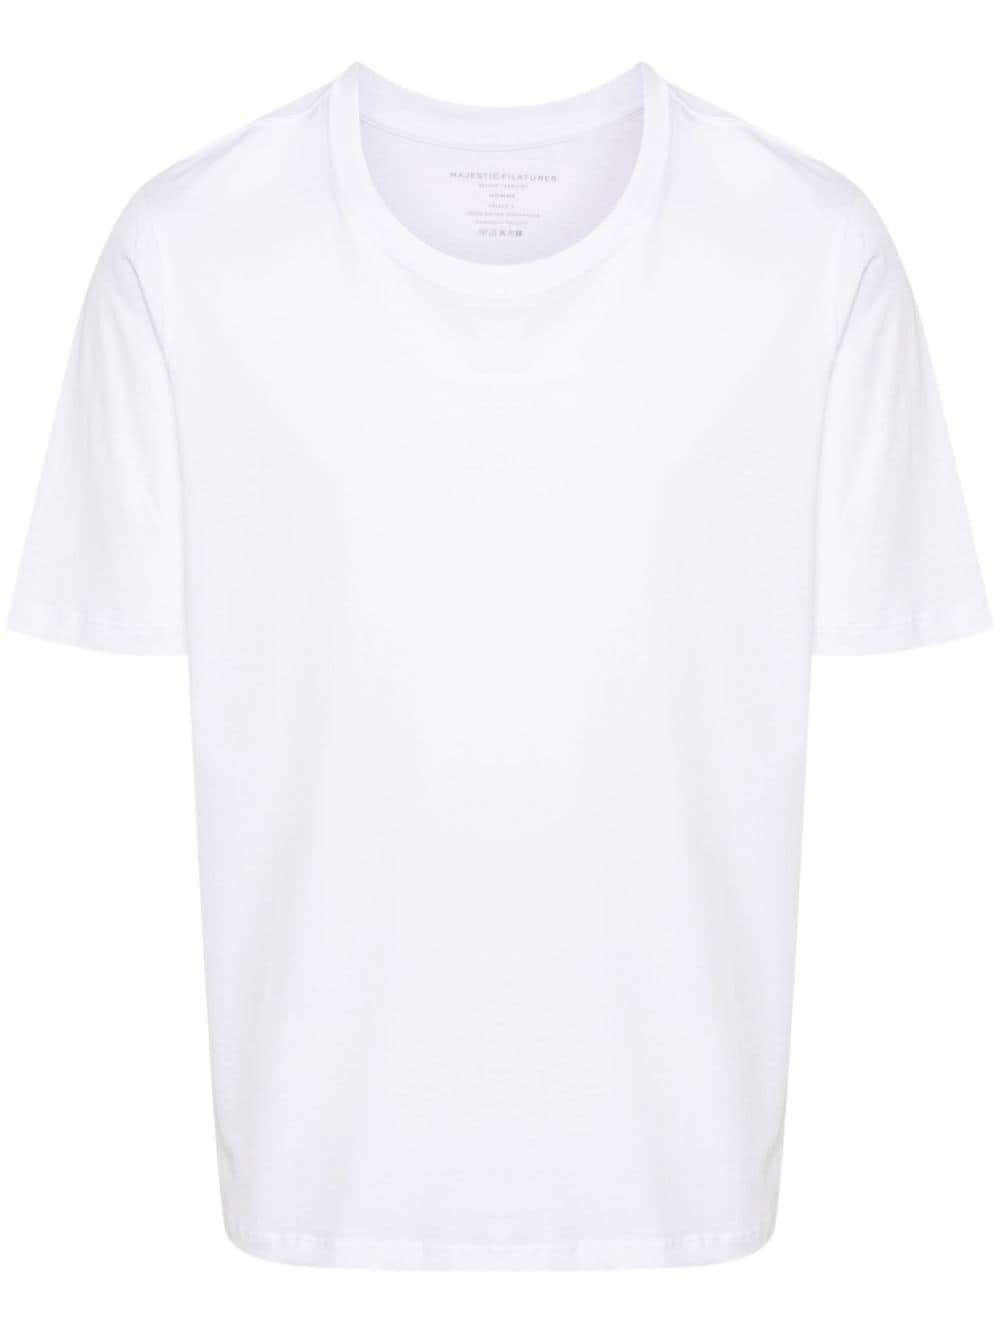 Majestic Organic Cotton T-shirt In White